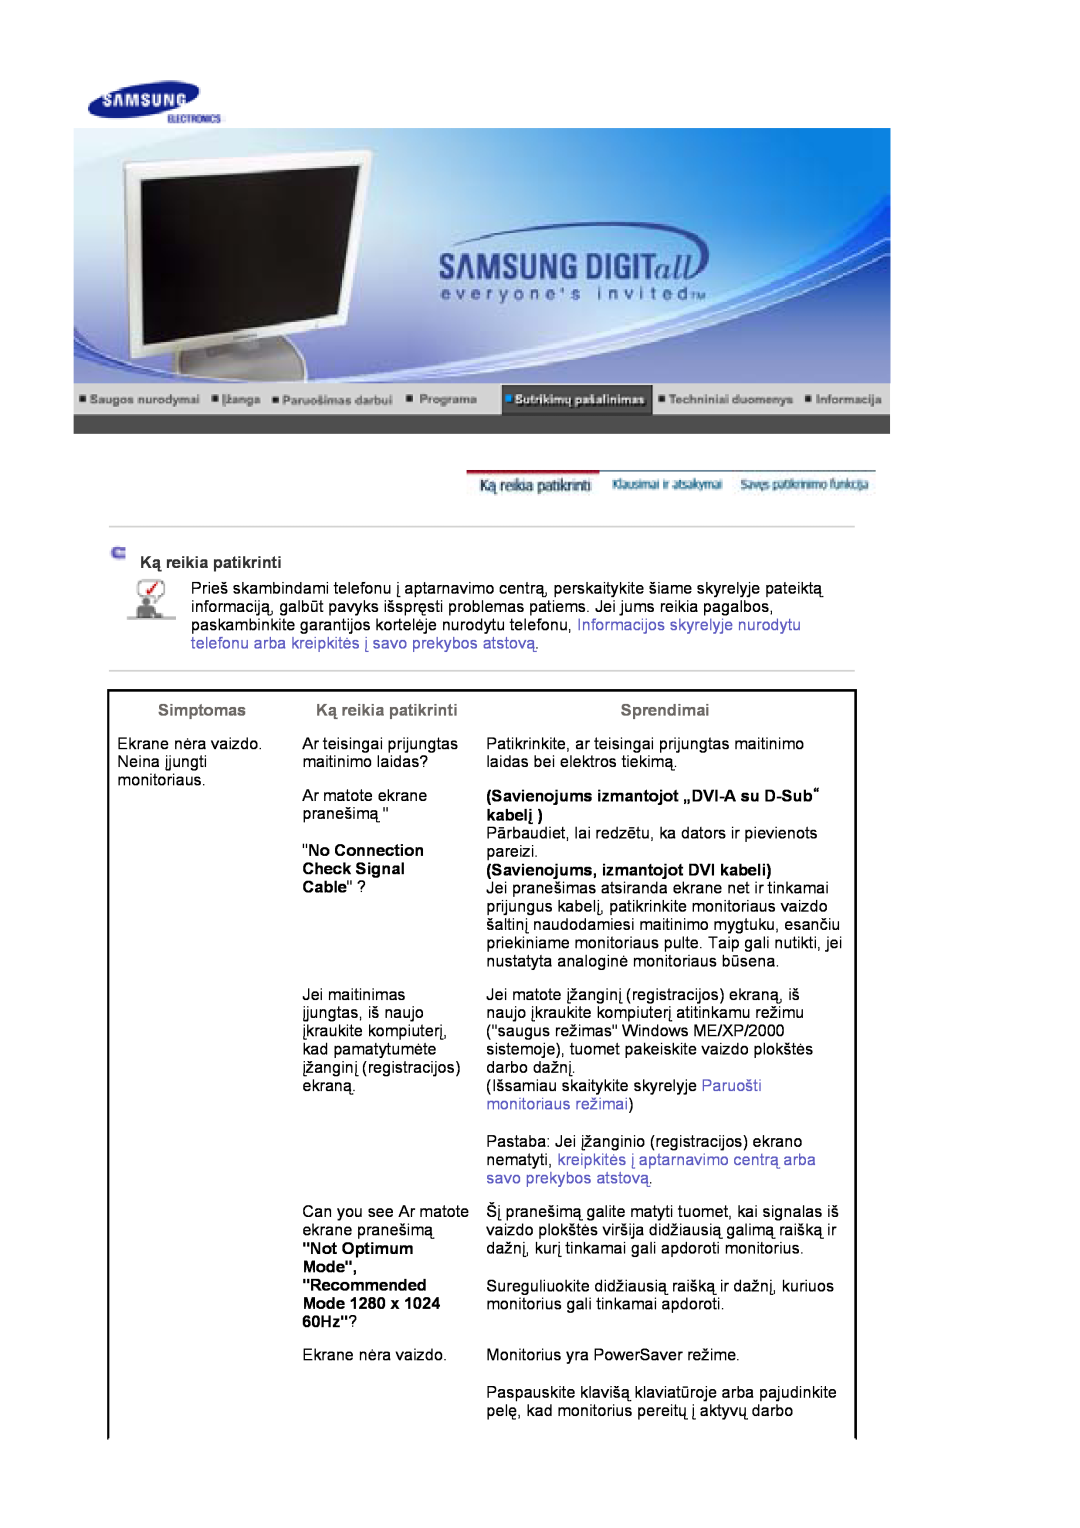 Samsung LS19HJDQHV/EDC Ką reikia patikrinti, No Connection, Check Signal, Cable ?, Savienojums, izmantojot DVI kabeli 